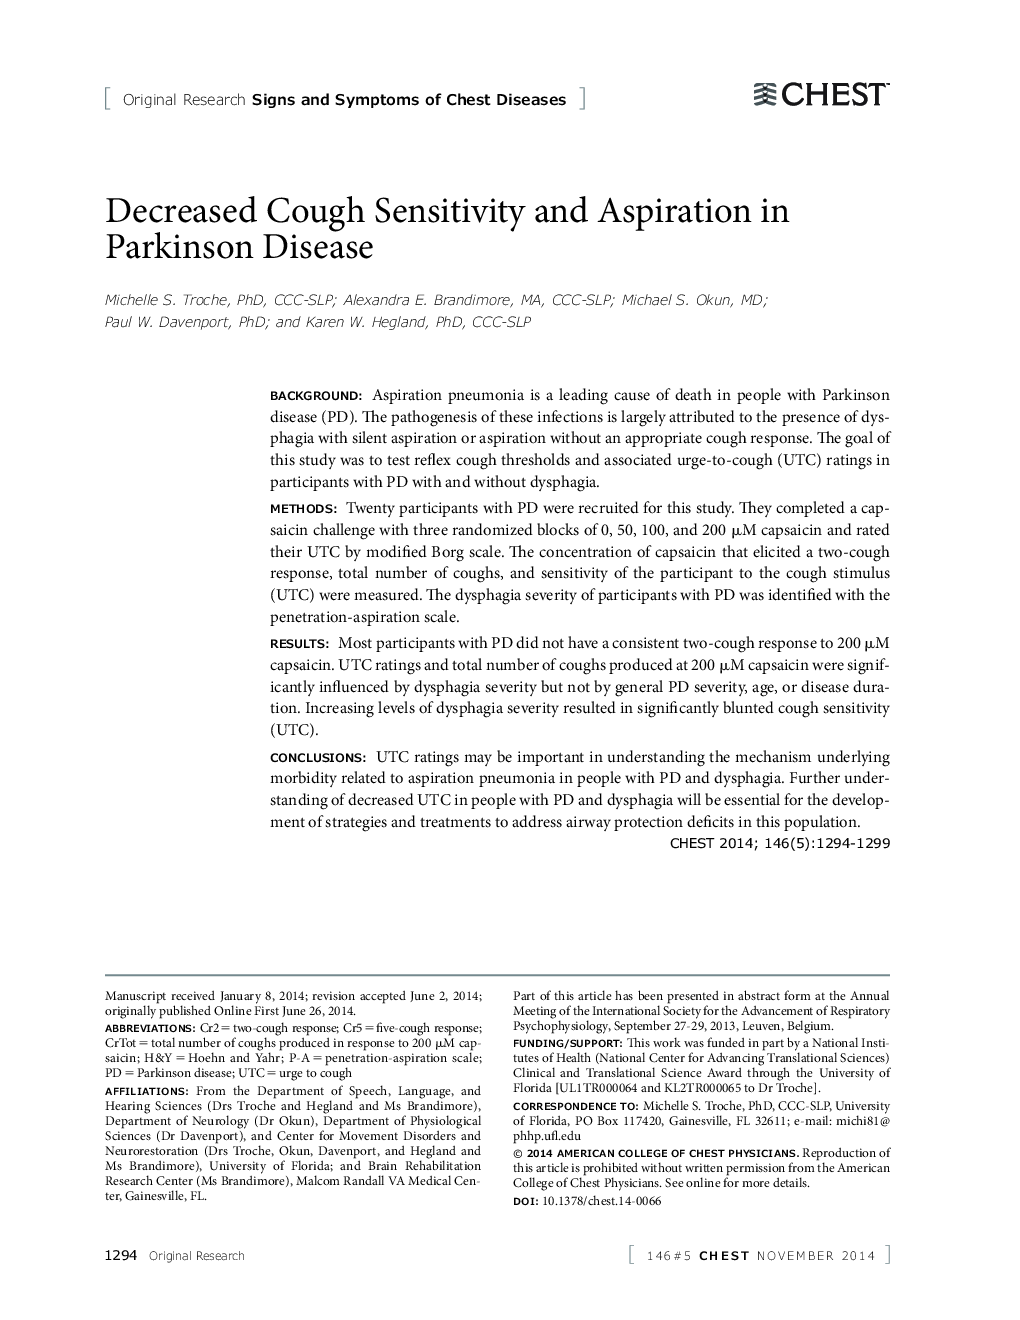 Decreased Cough Sensitivity and Aspiration in Parkinson Disease